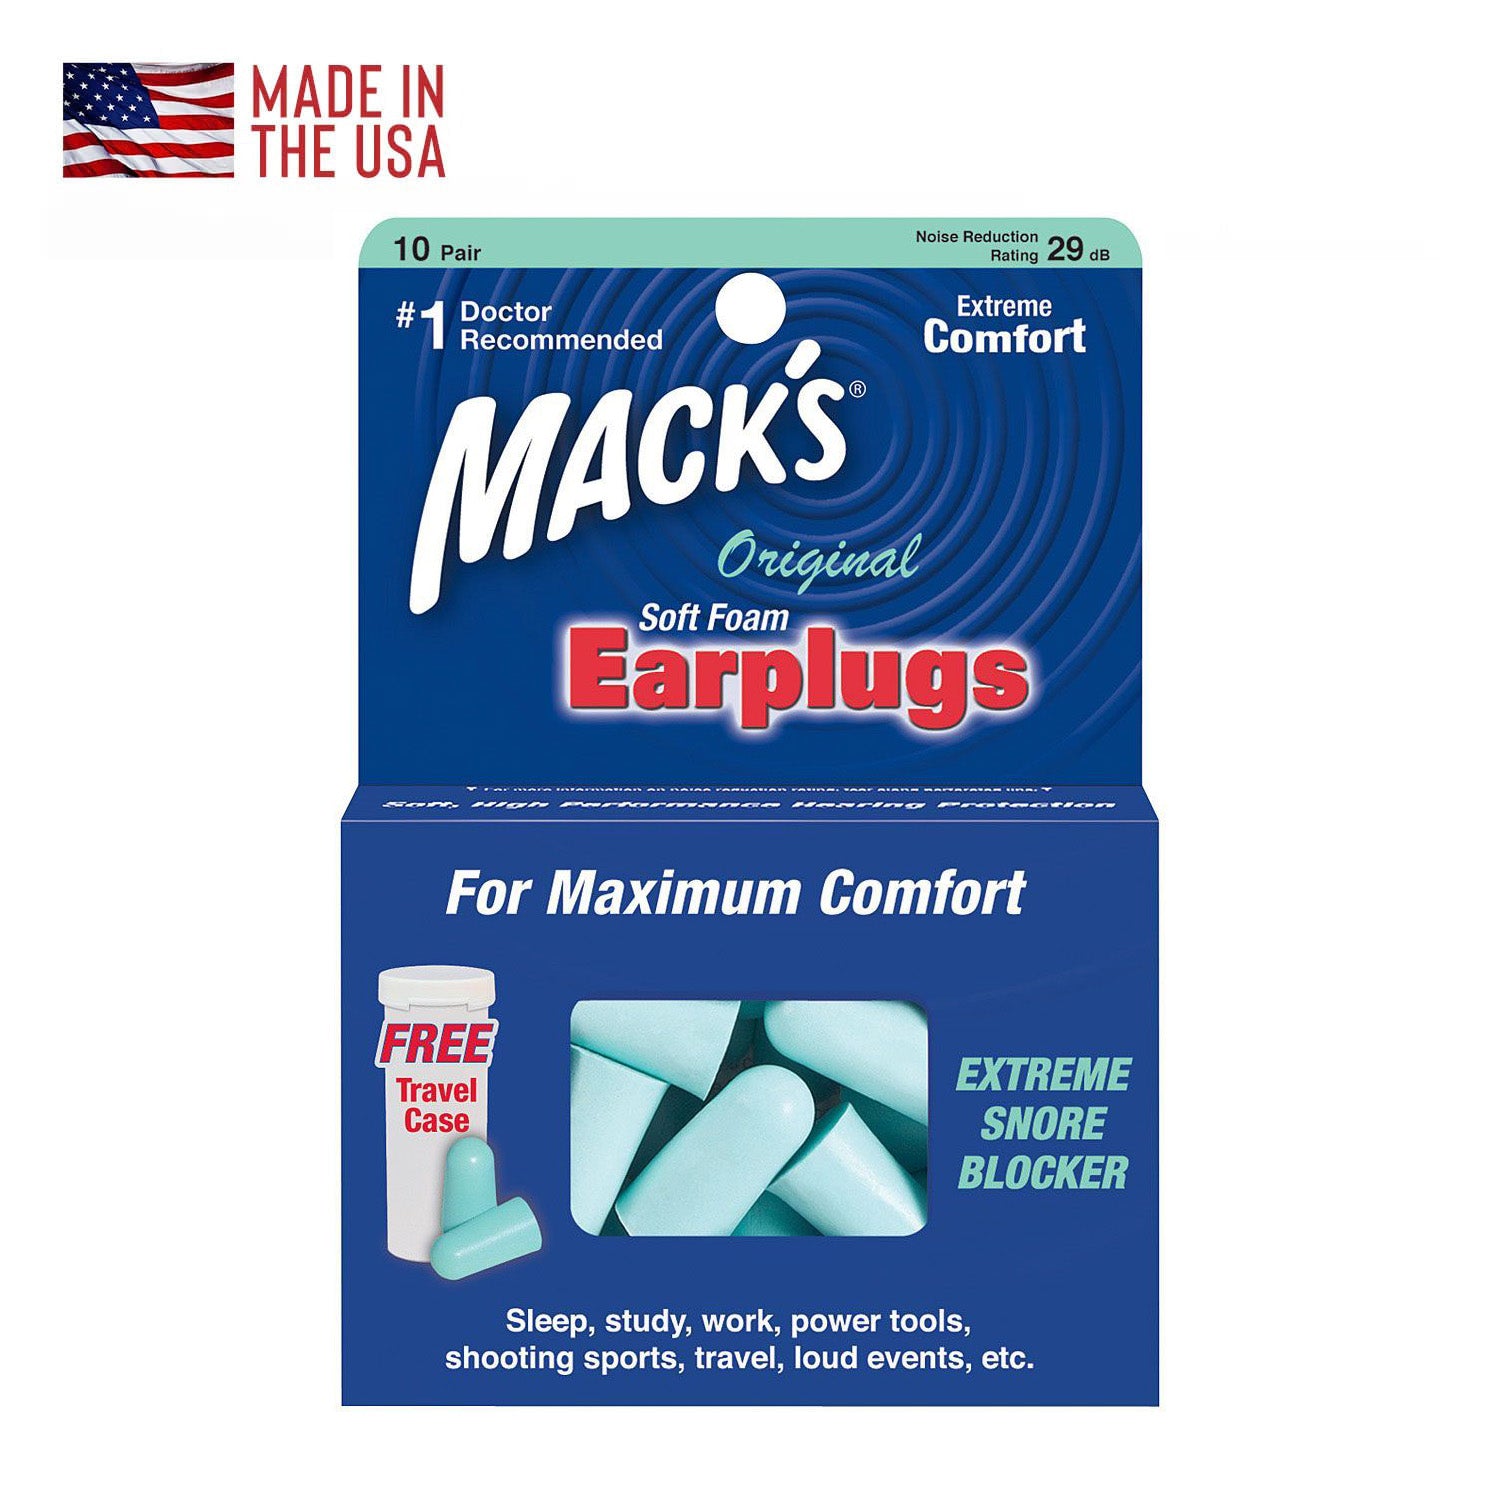 Macks Original Earplugs